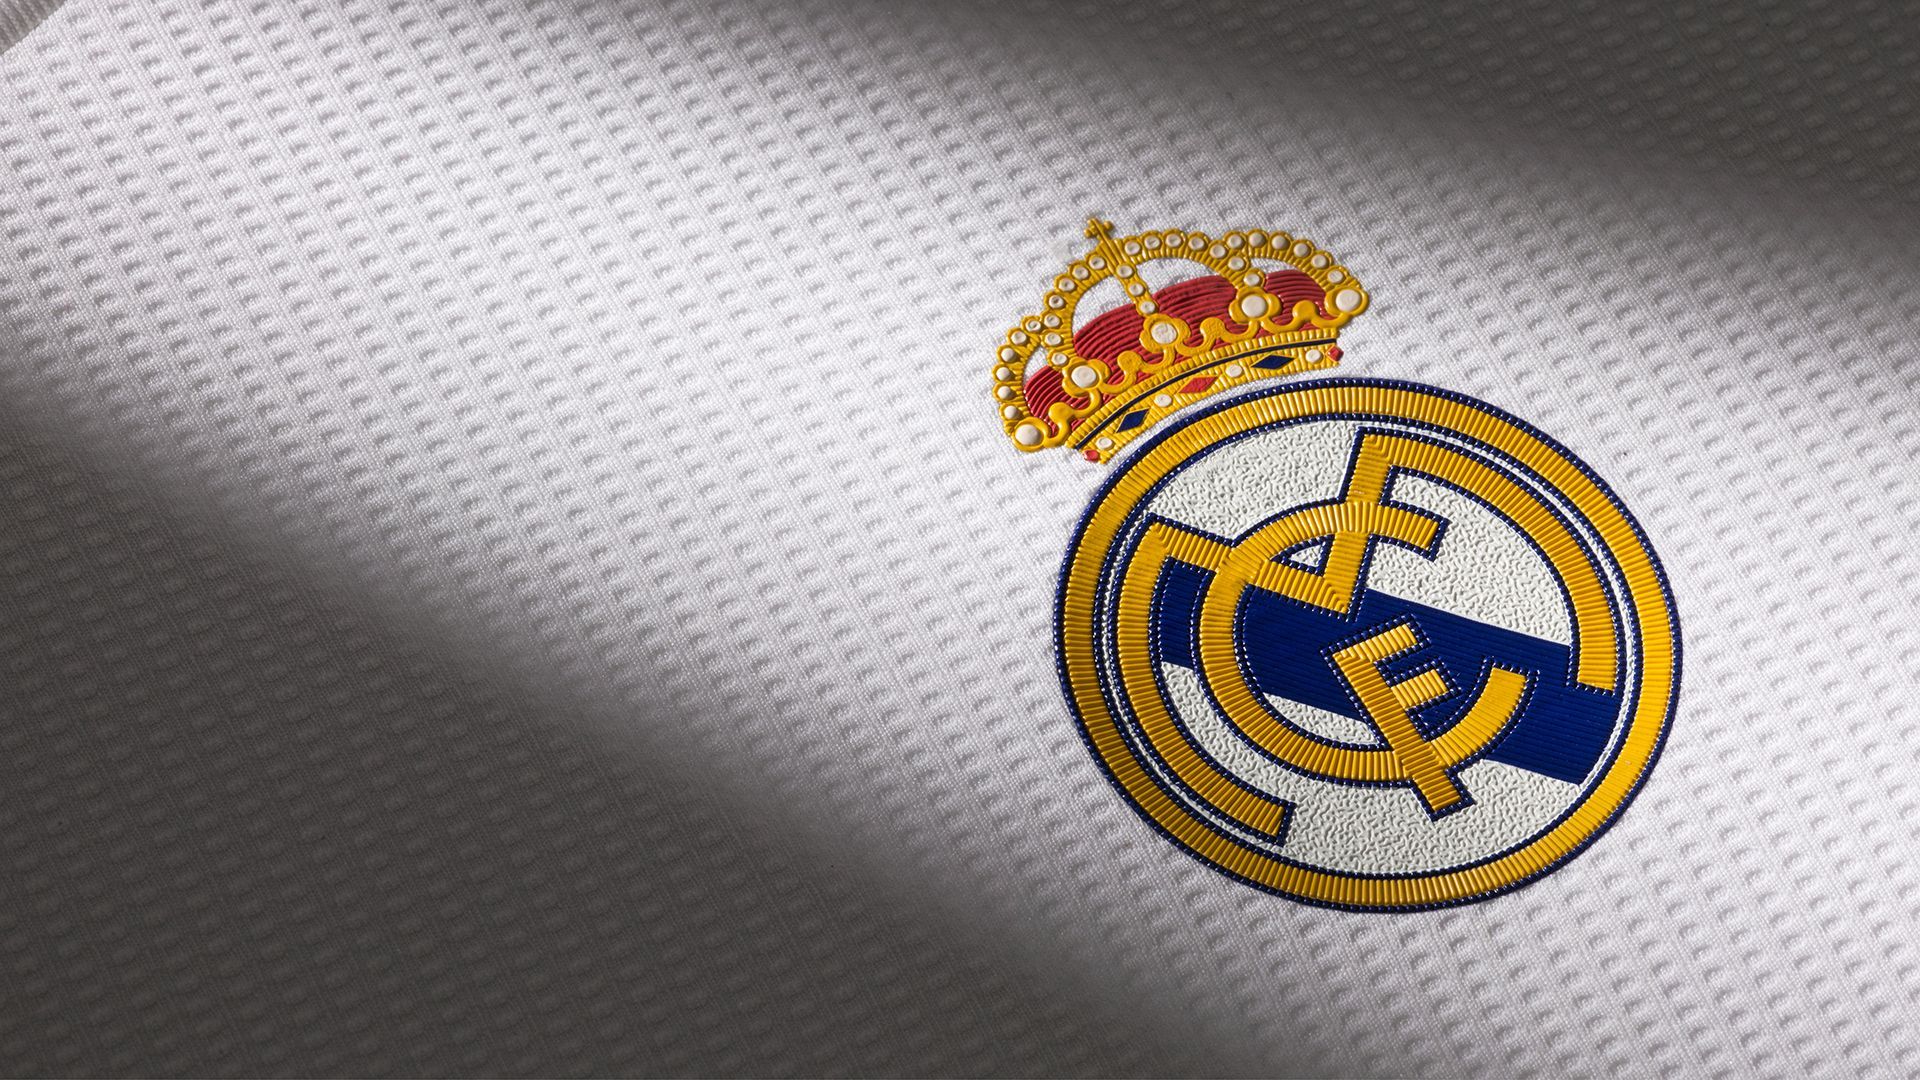 Real Madrid Poster. Real madrid logo wallpaper, Real madrid